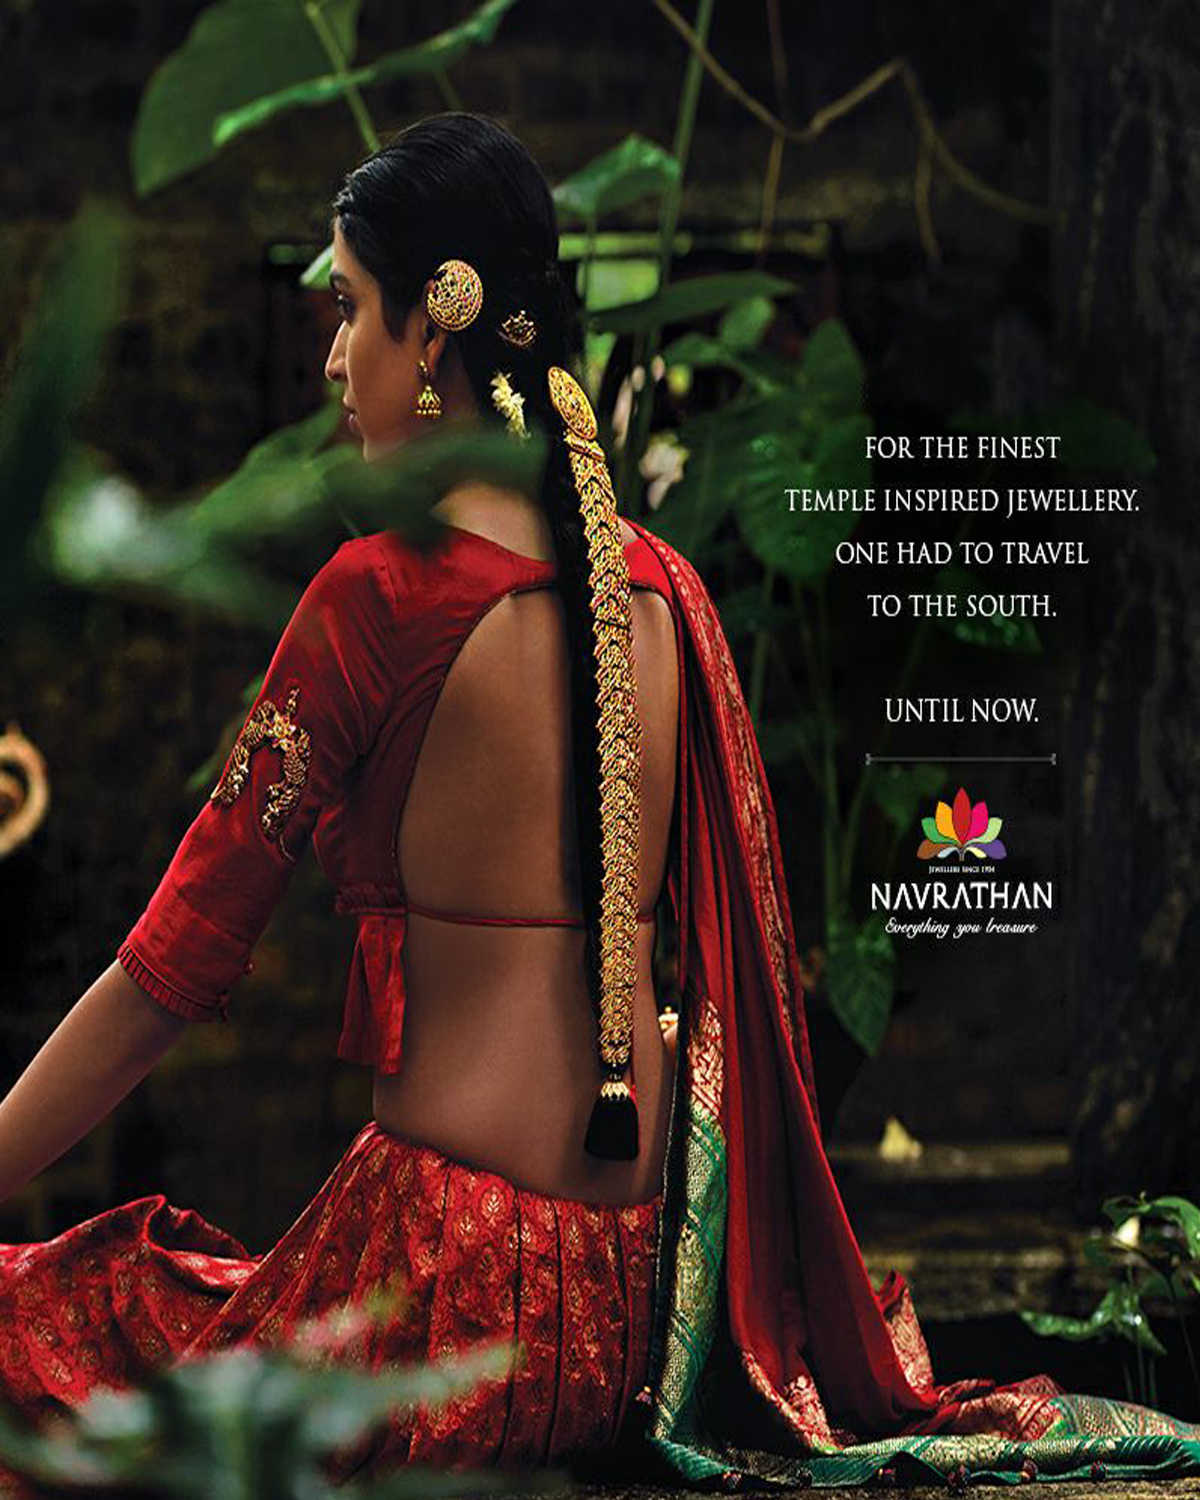 Celebrating Vivaha, Anand Ranawat, Bridal Jewellery, Wedding Trends